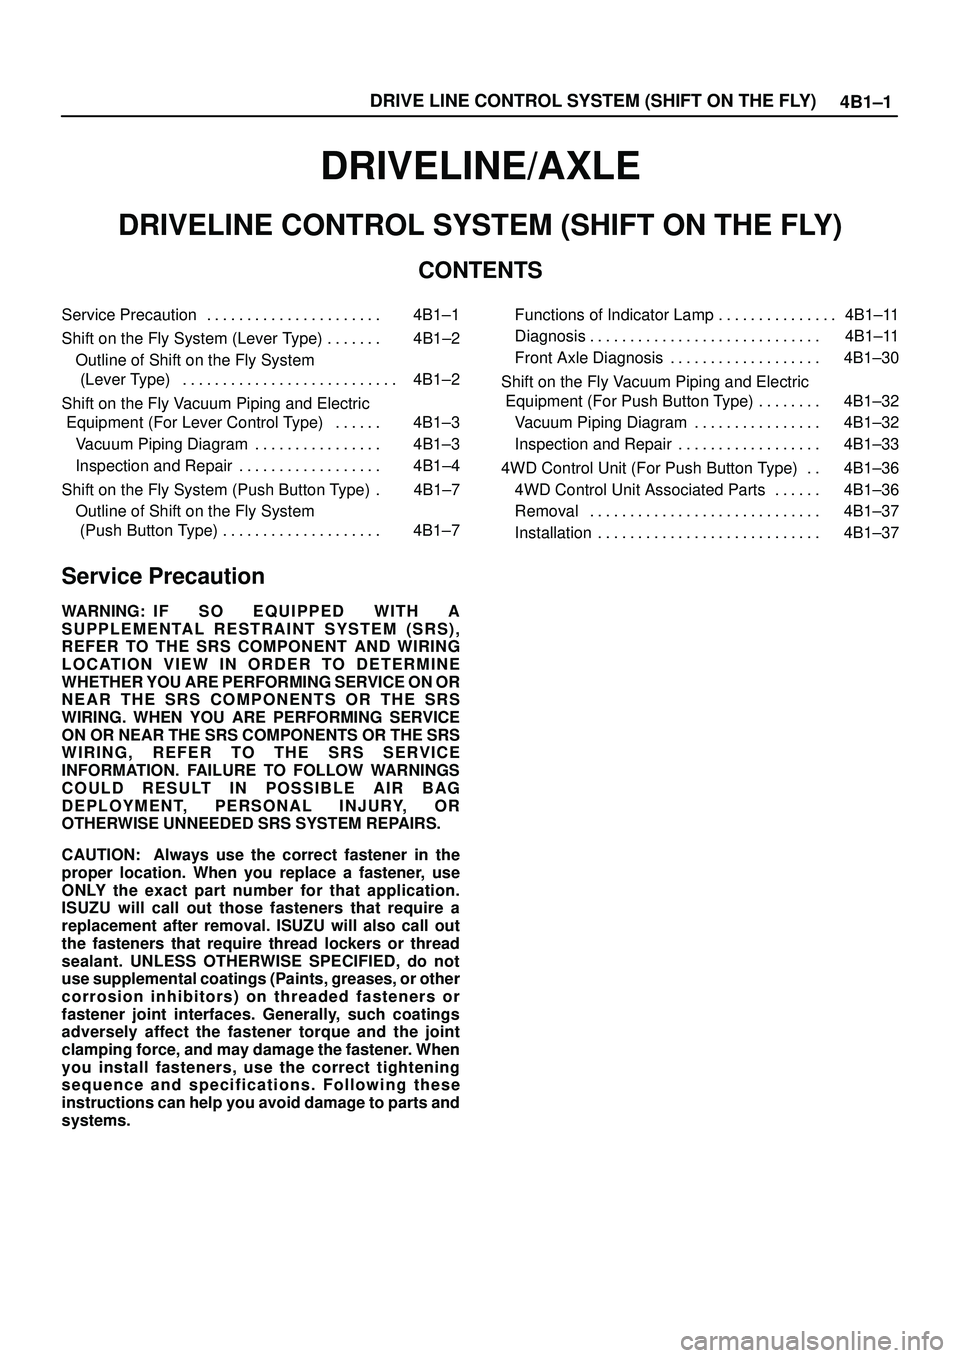 ISUZU TROOPER 1998  Service Repair Manual 4B1±1 DRIVE LINE CONTROL SYSTEM (SHIFT ON THE FLY)
DRIVELINE/AXLE
DRIVELINE CONTROL SYSTEM (SHIFT ON THE FLY)
CONTENTS
Service Precaution 4B1±1. . . . . . . . . . . . . . . . . . . . . . 
Shift on t